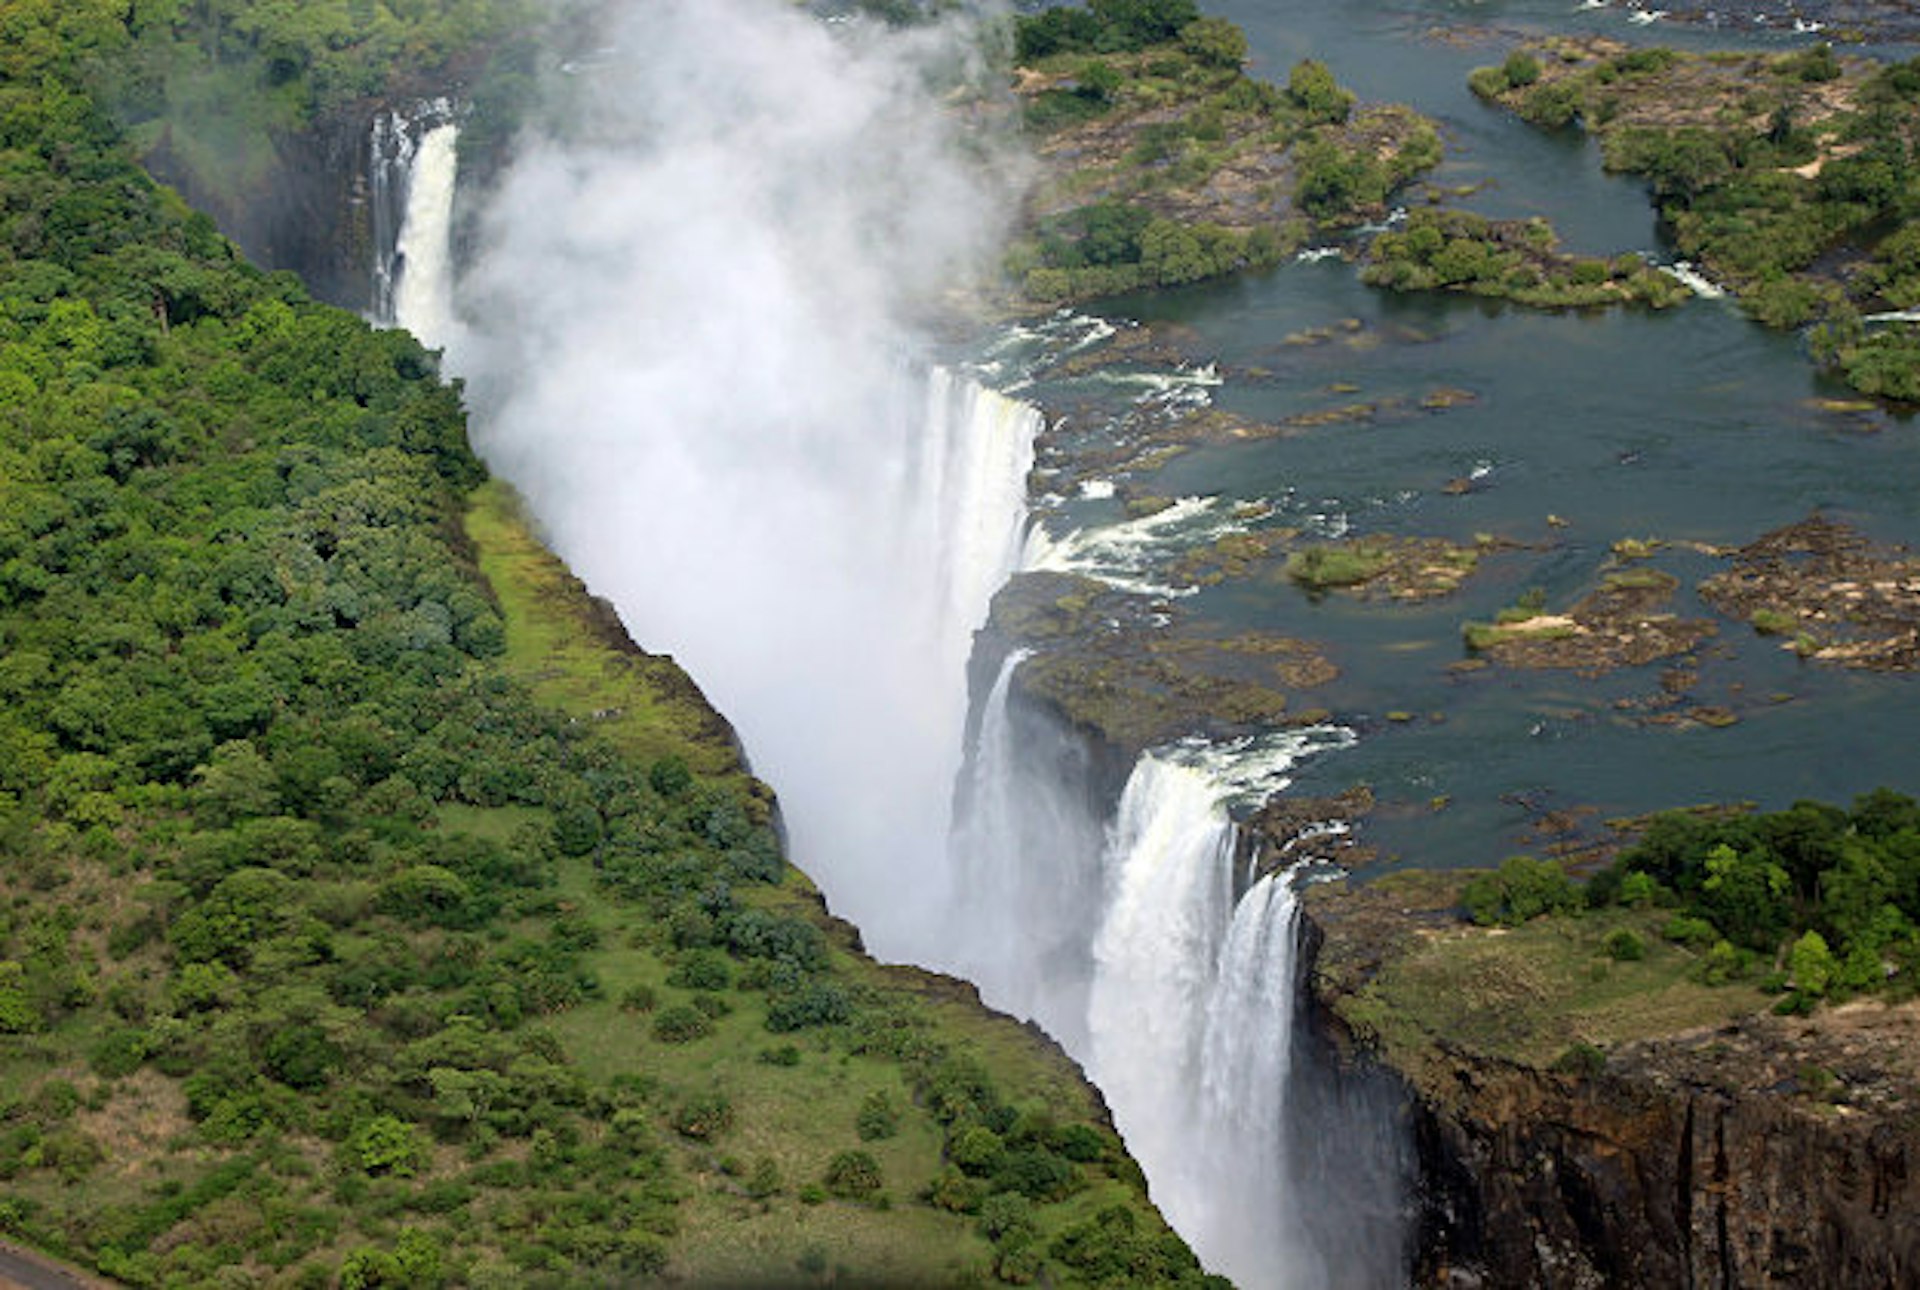 Victoria Falls on the border between Zambia and Zimbabwe.